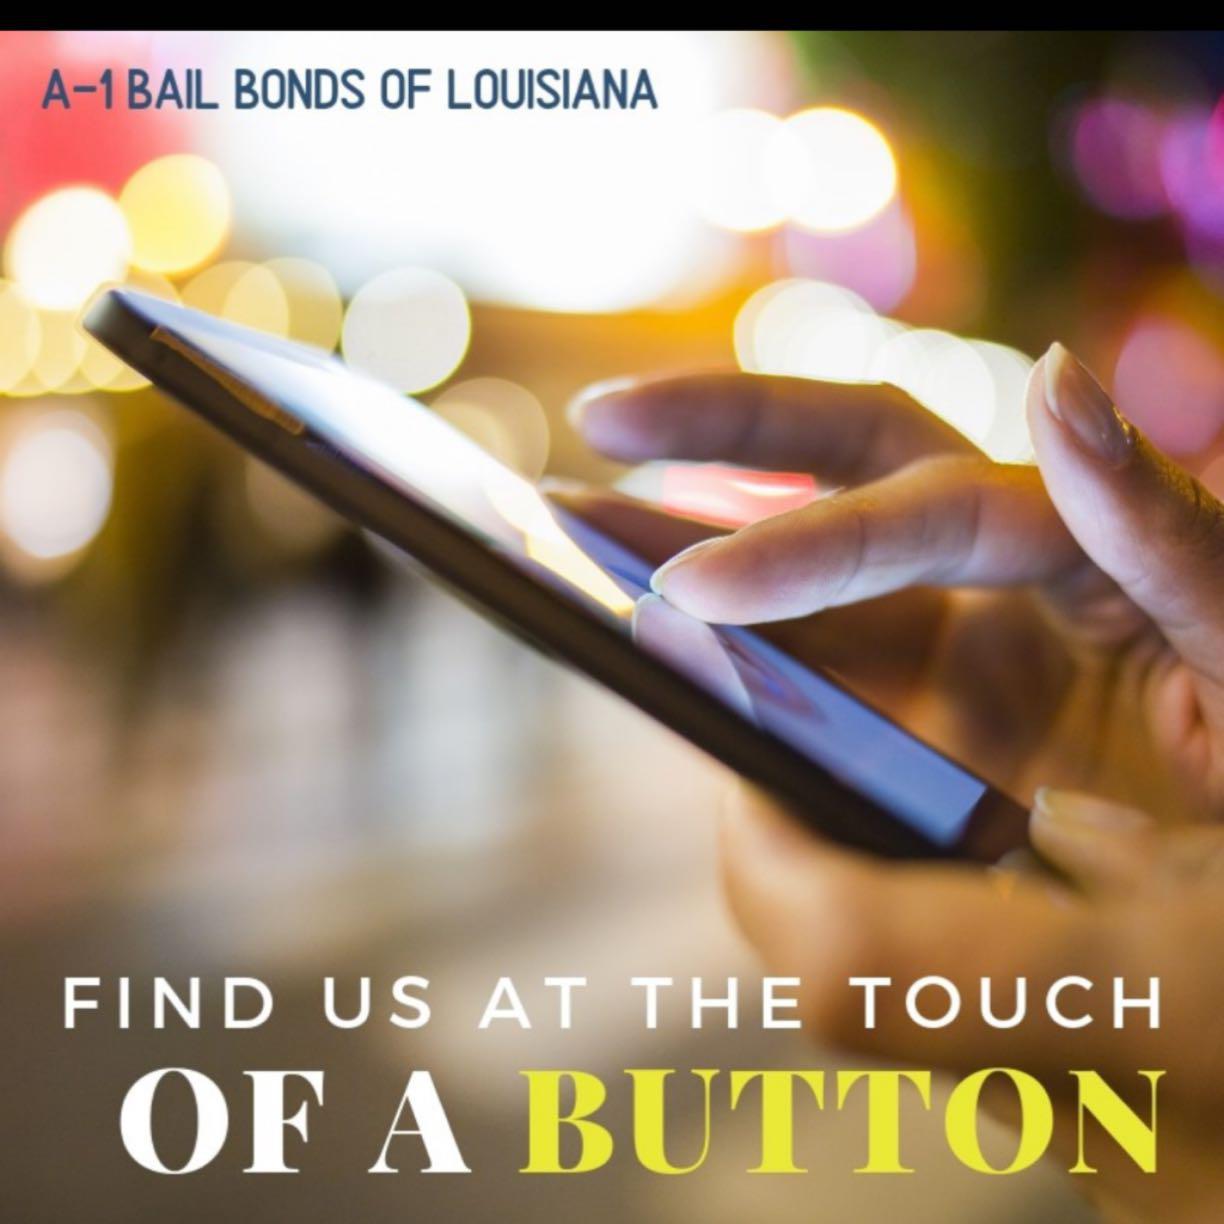 A-1 Bail Bonds of Louisiana Photo